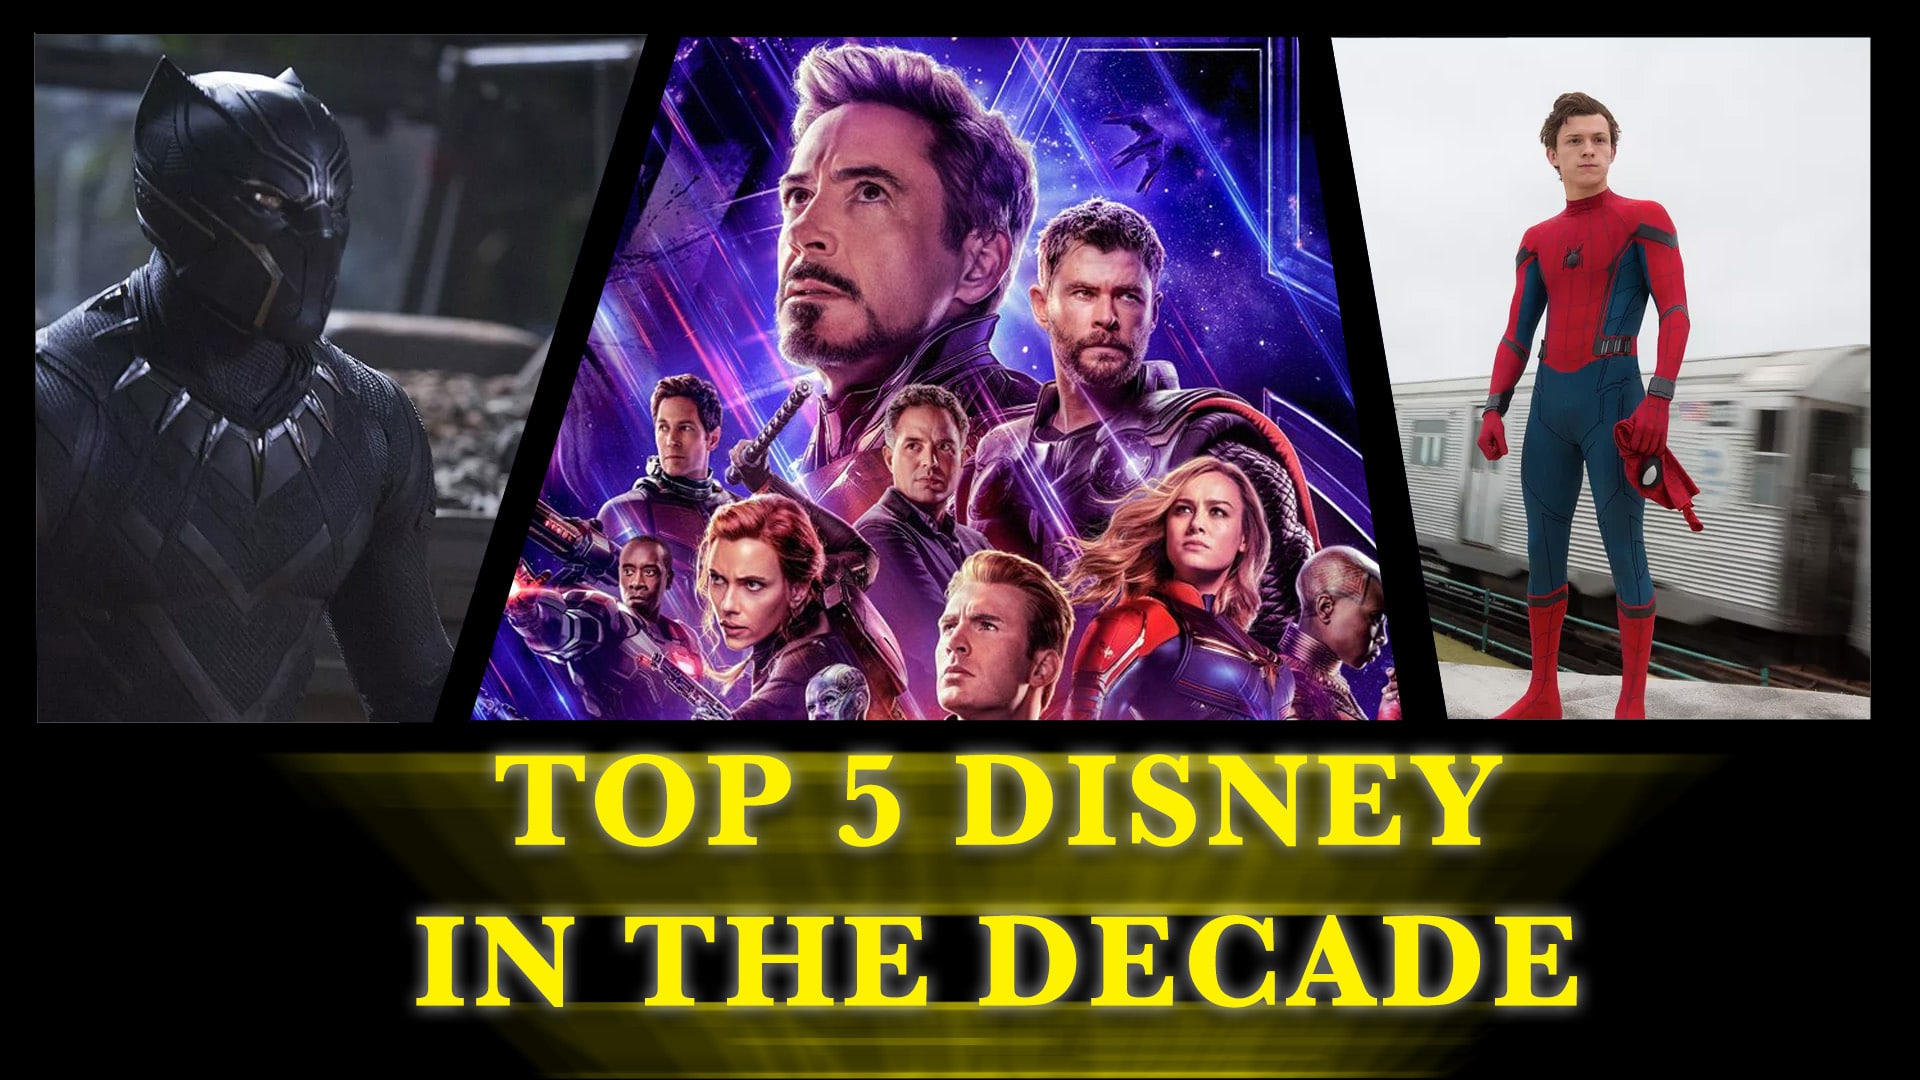 Marvel Studios Box Office – #2 of Top 5 Disney Stories of the Decade